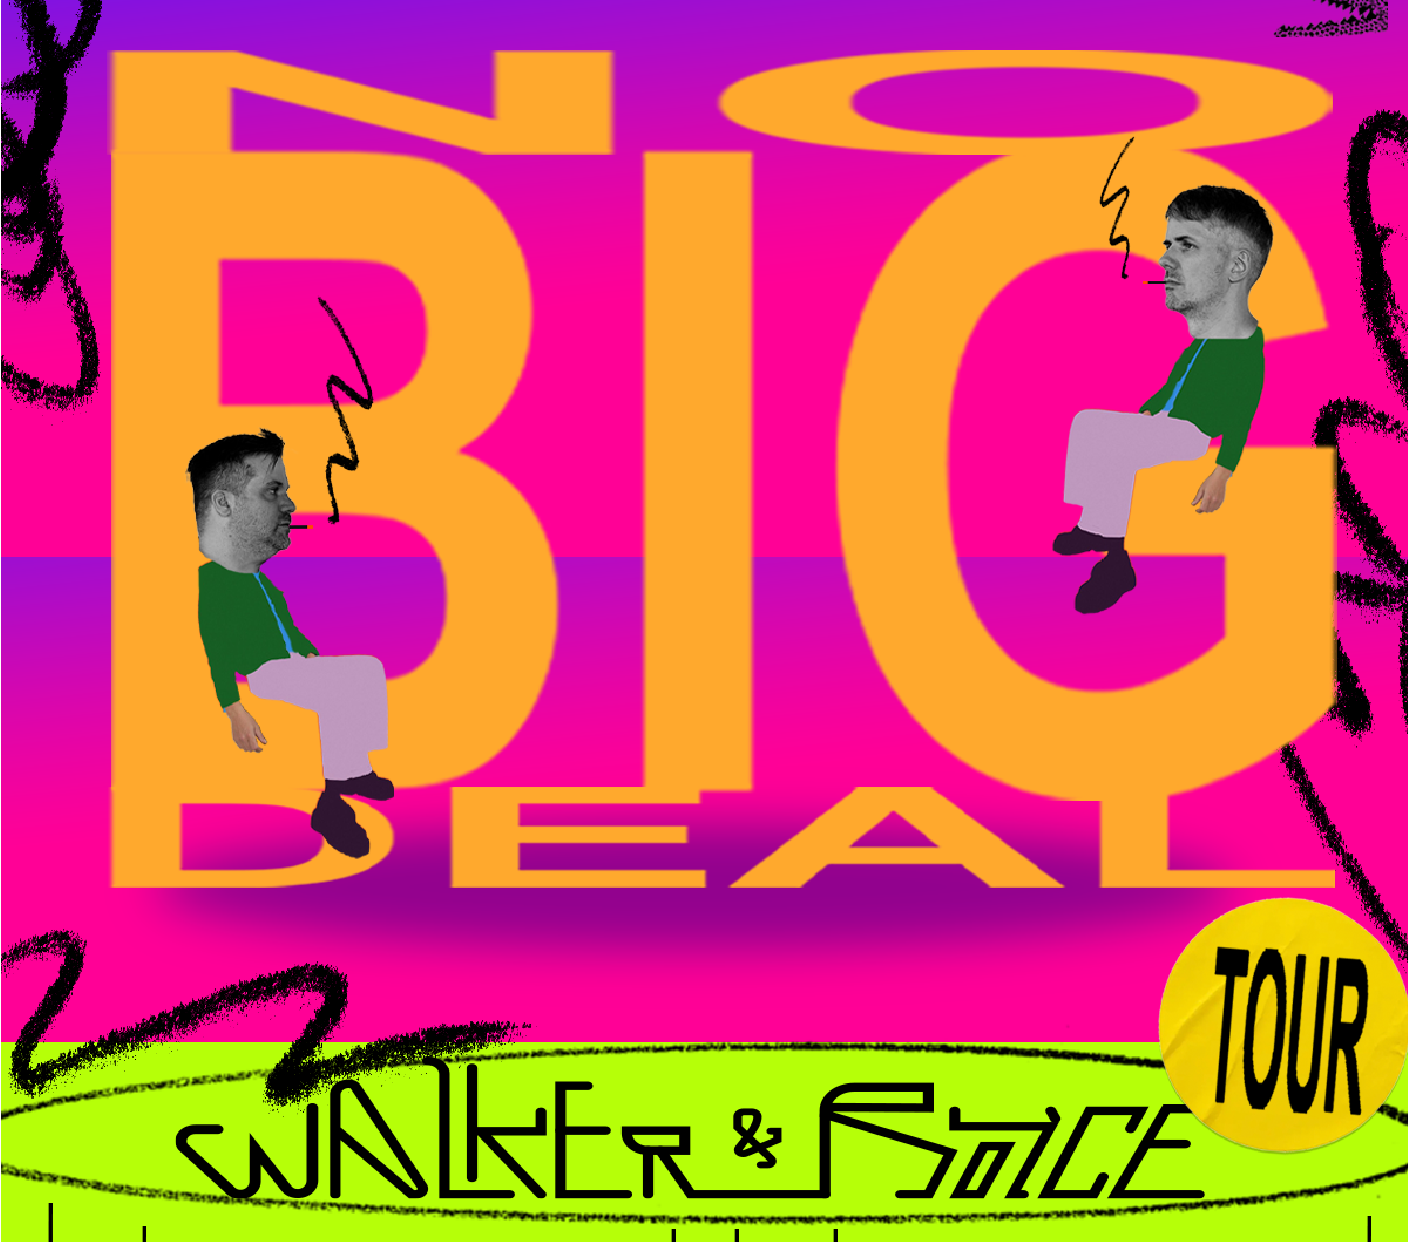 Tour Art for Walker & Royce - "No Big Deal"